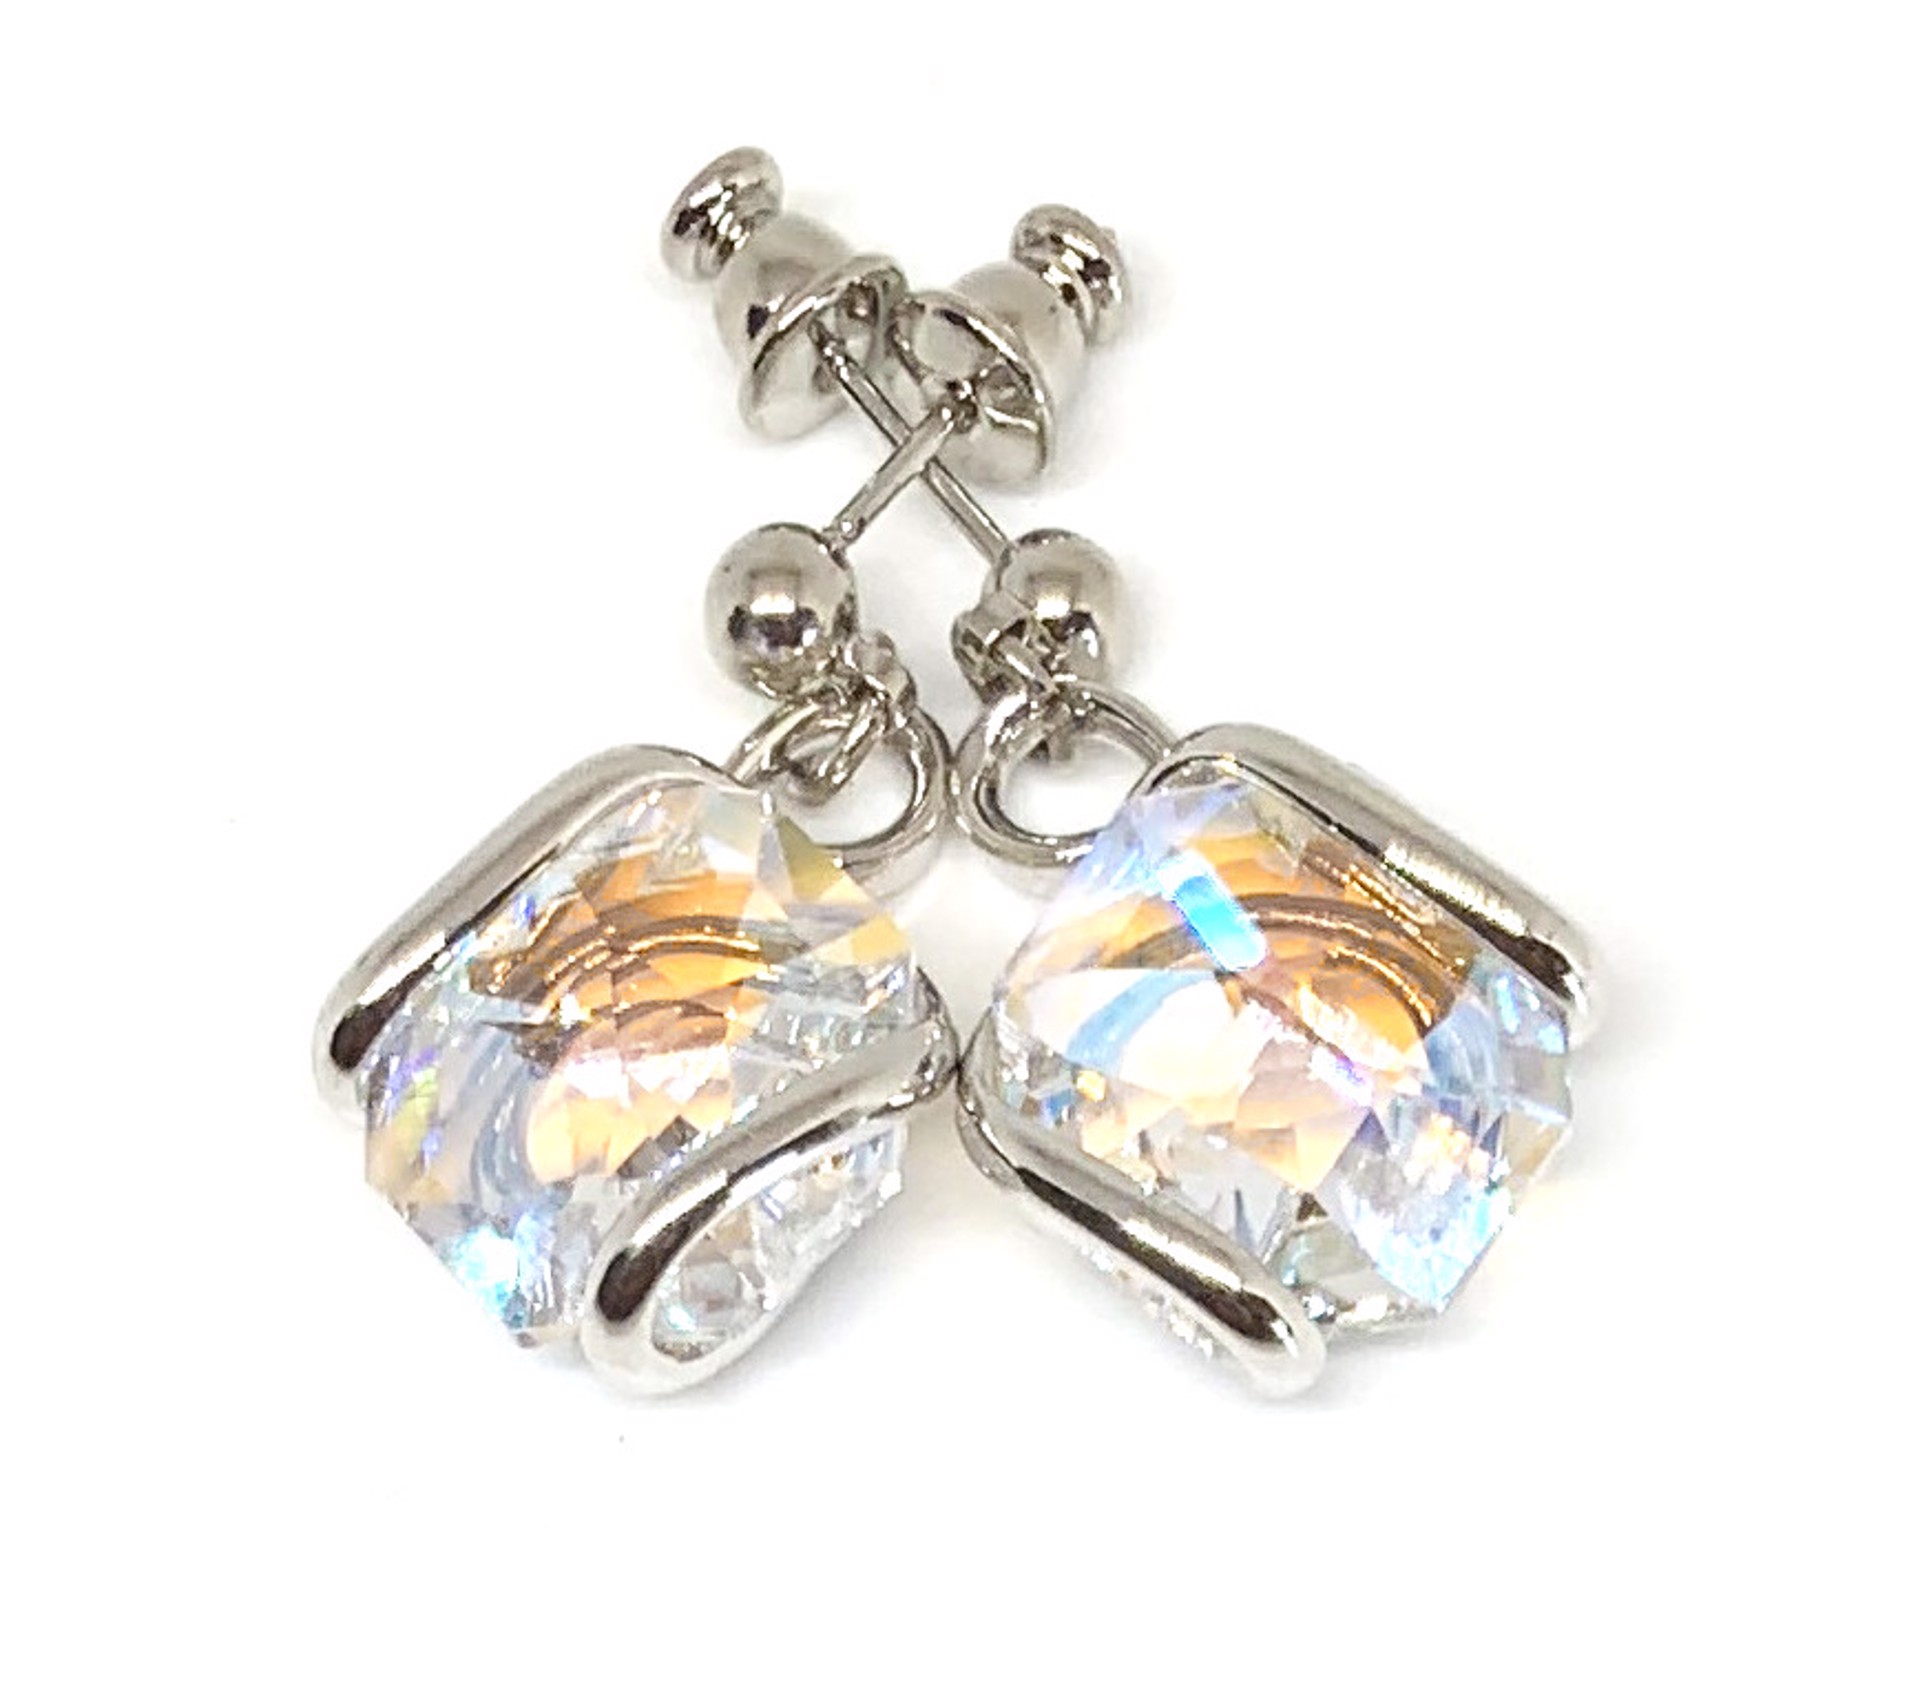  Aurora Borealis Clear Swarovski Crystal Dangle Earrings - Triple Rhodium Plated by Monique Touber